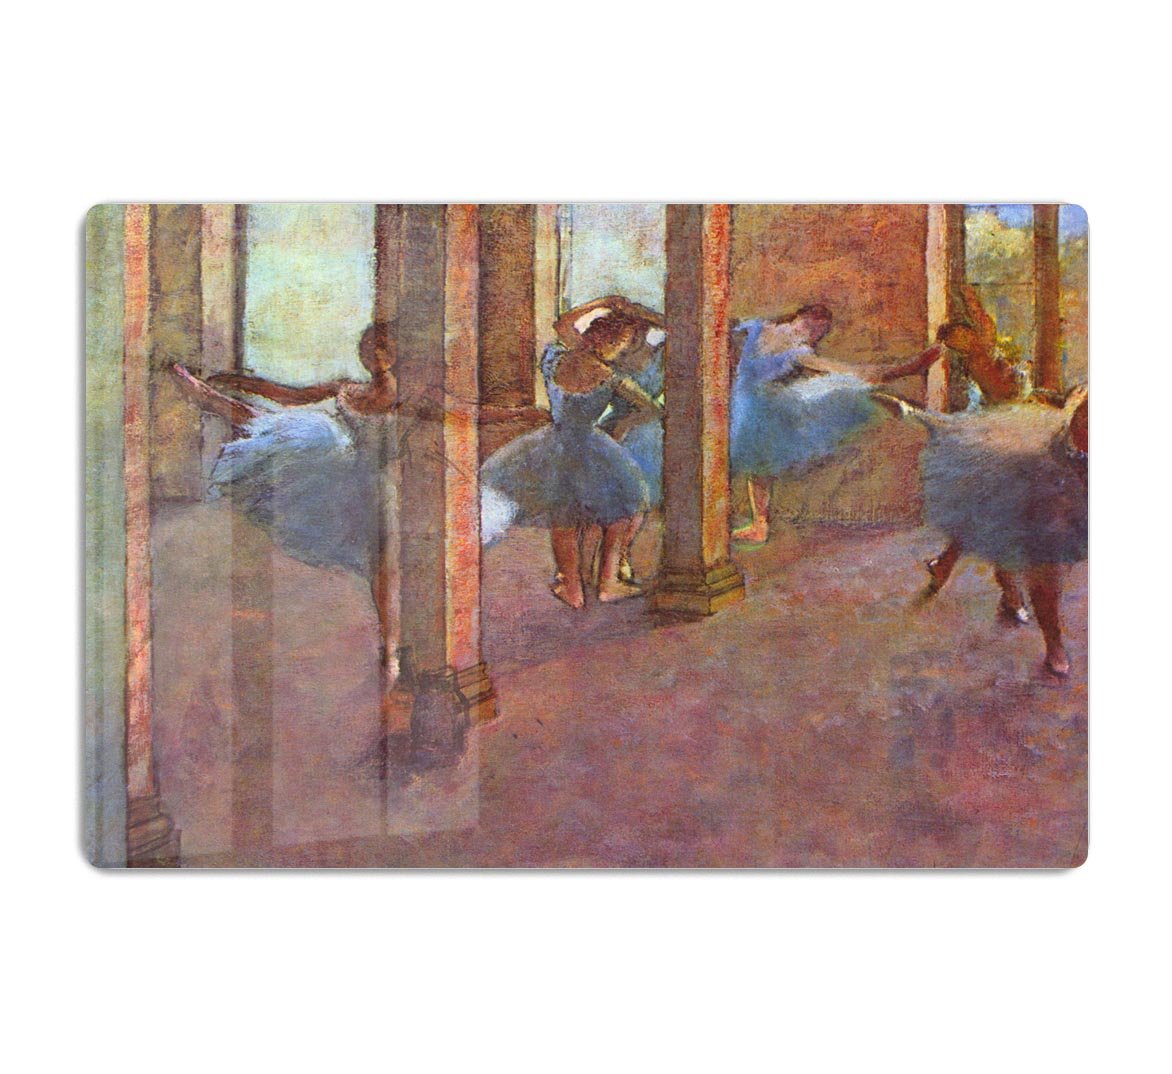 Dancers in the Foyer by Degas HD Metal Print - Canvas Art Rocks - 1